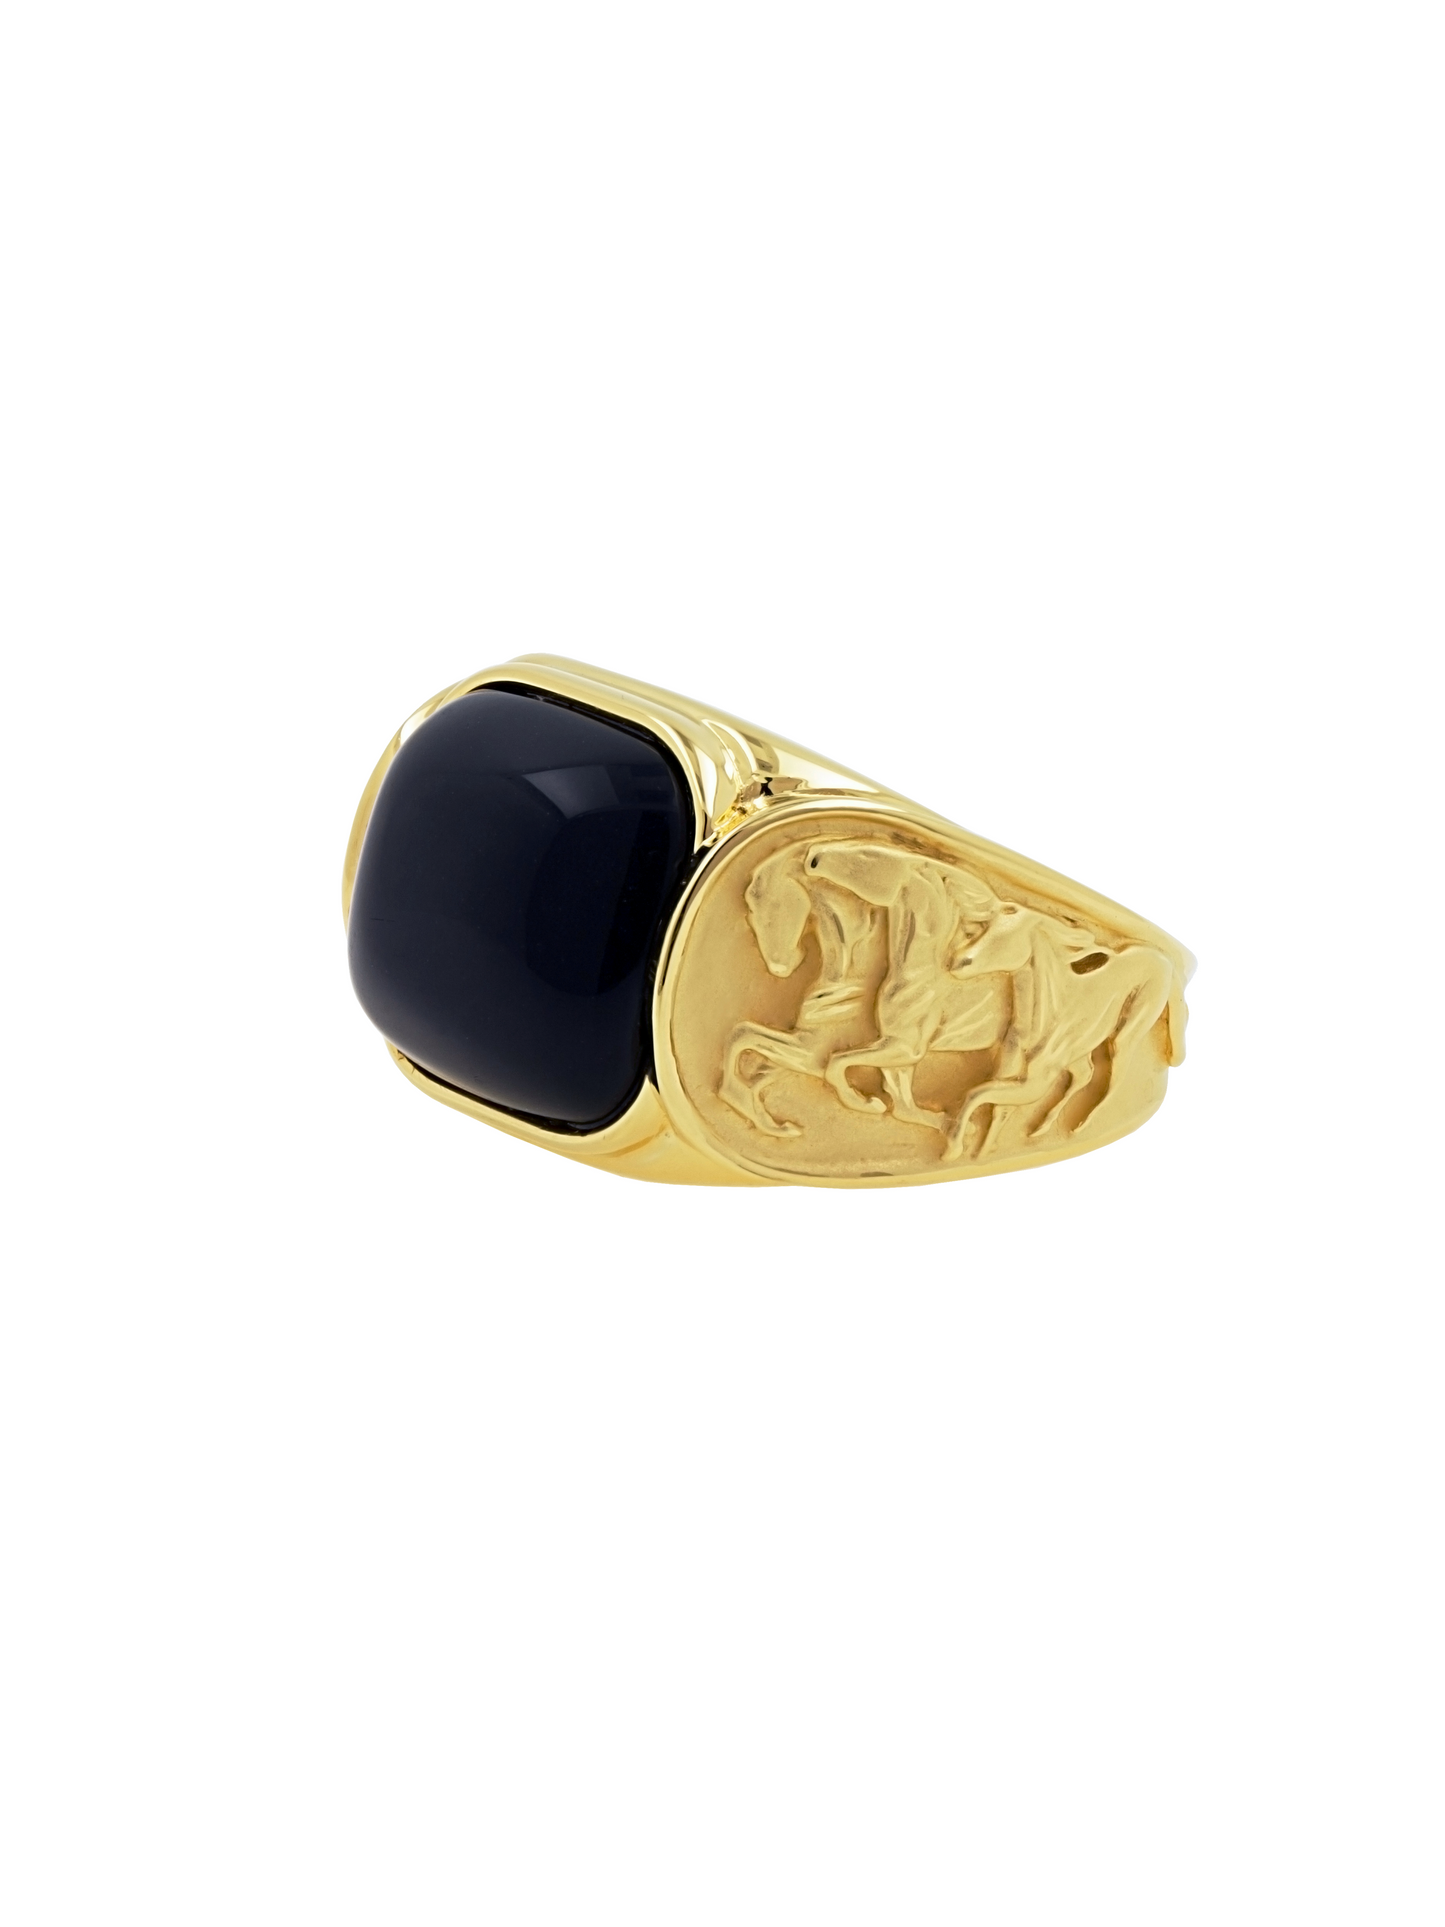 Gold Ring “LOFTY CREATURE” - Manuel Carrera Cordon